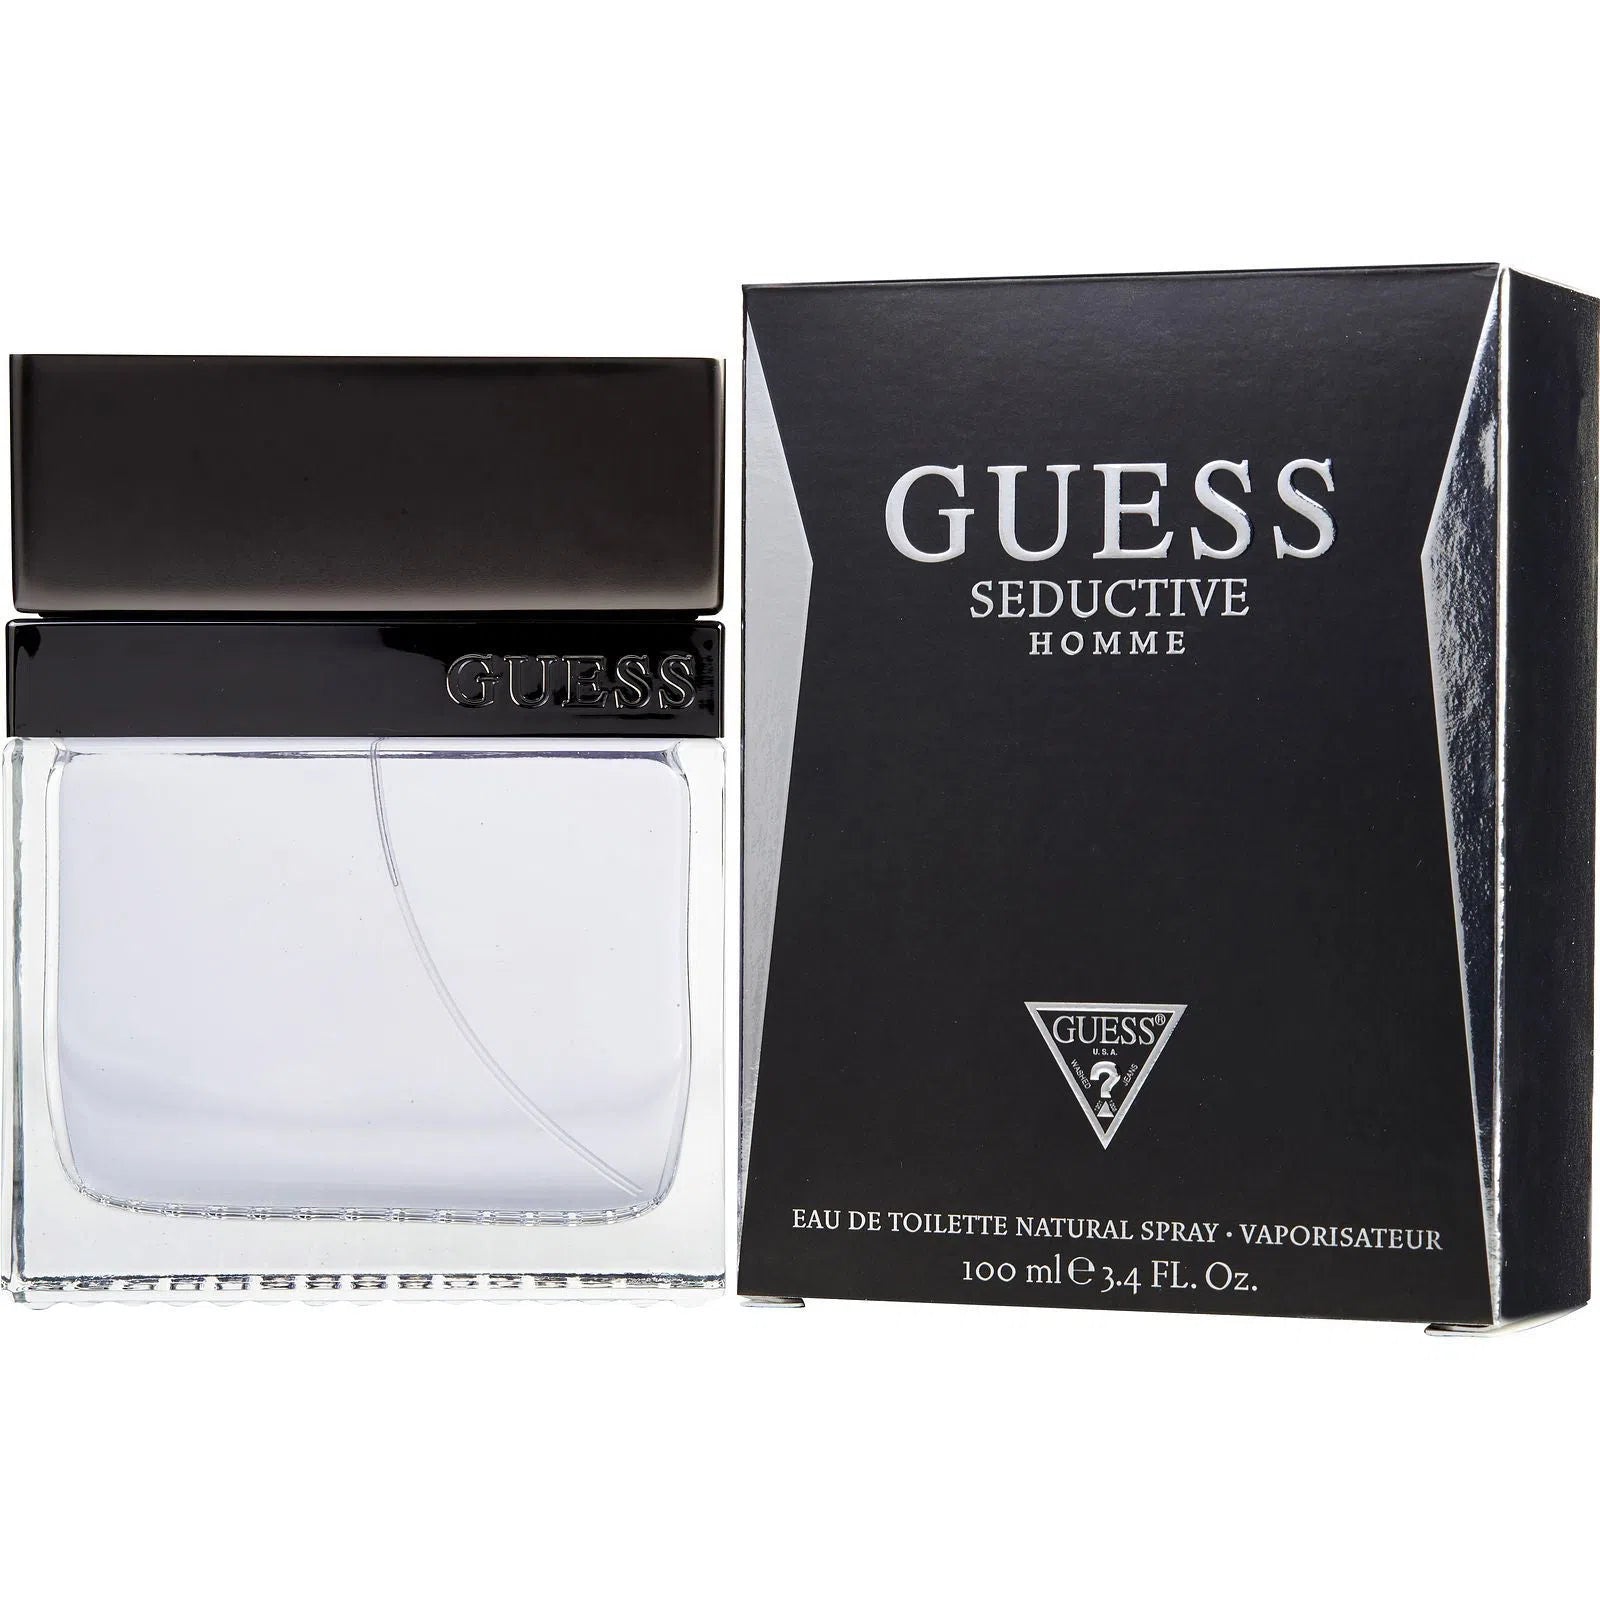 Perfume Guess Seductive Homme EDT (M) / 100 ml - 085715320315- Prive Perfumes Honduras